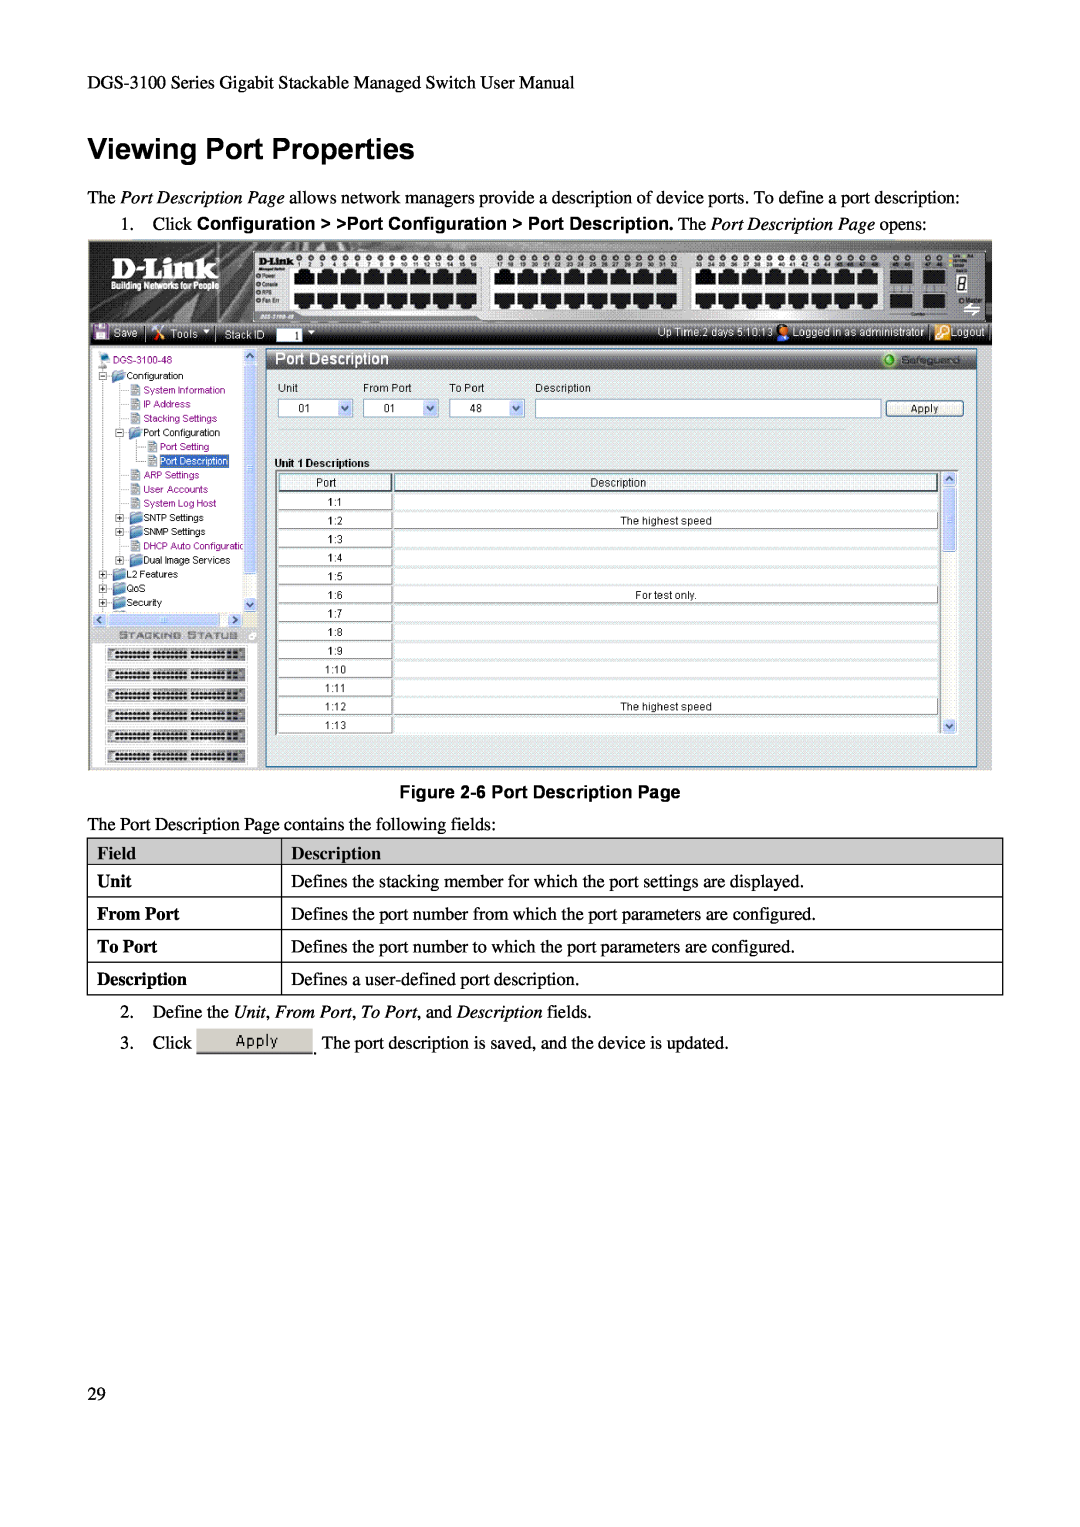 D-Link DGS-3100 user manual Viewing Port Properties, 6 Port Description Page, Field, Unit, From Port, To Port 